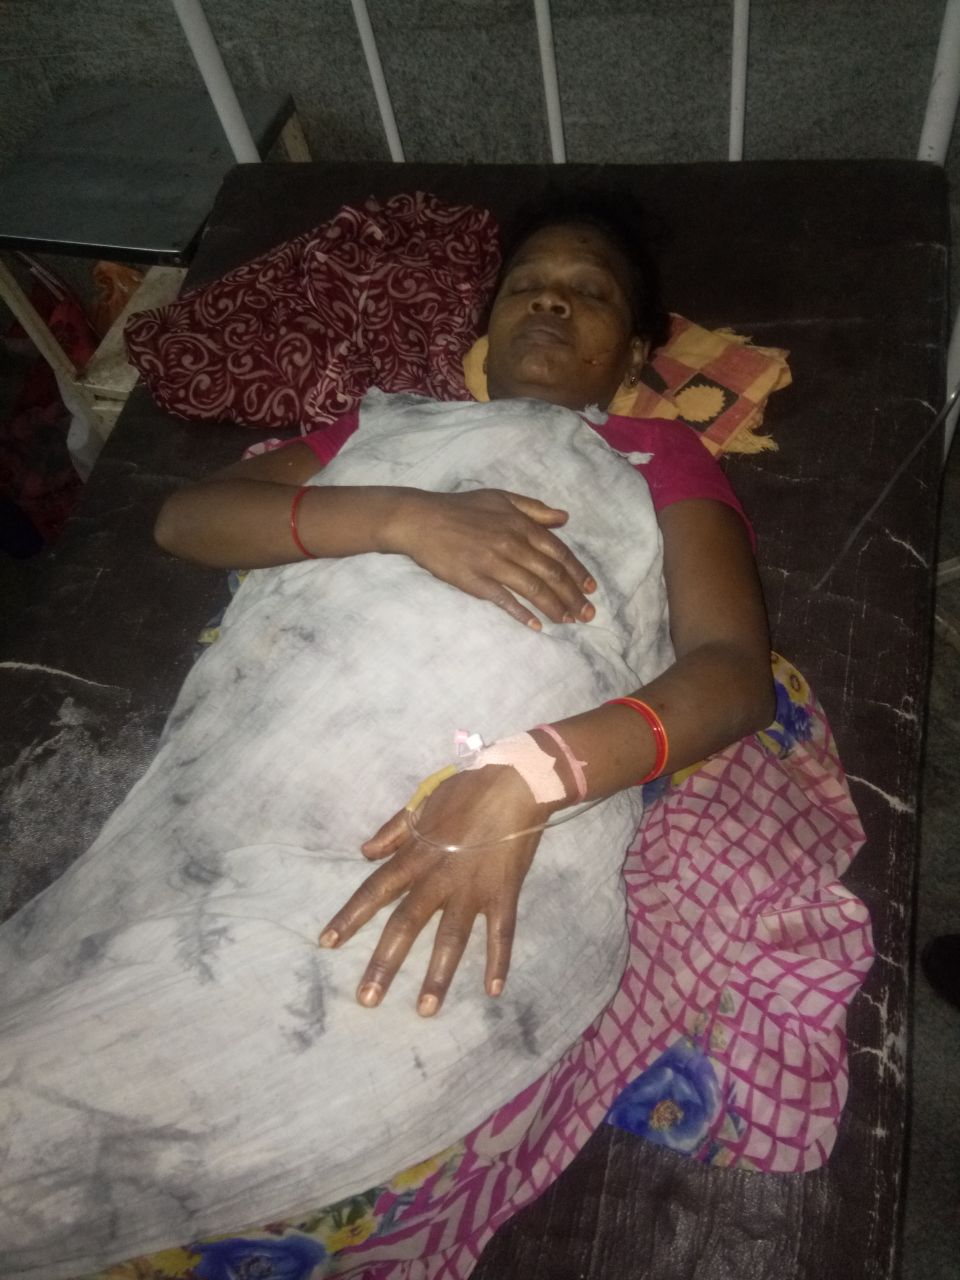 Husband killed wife in Bilaspur Chhattisgarh